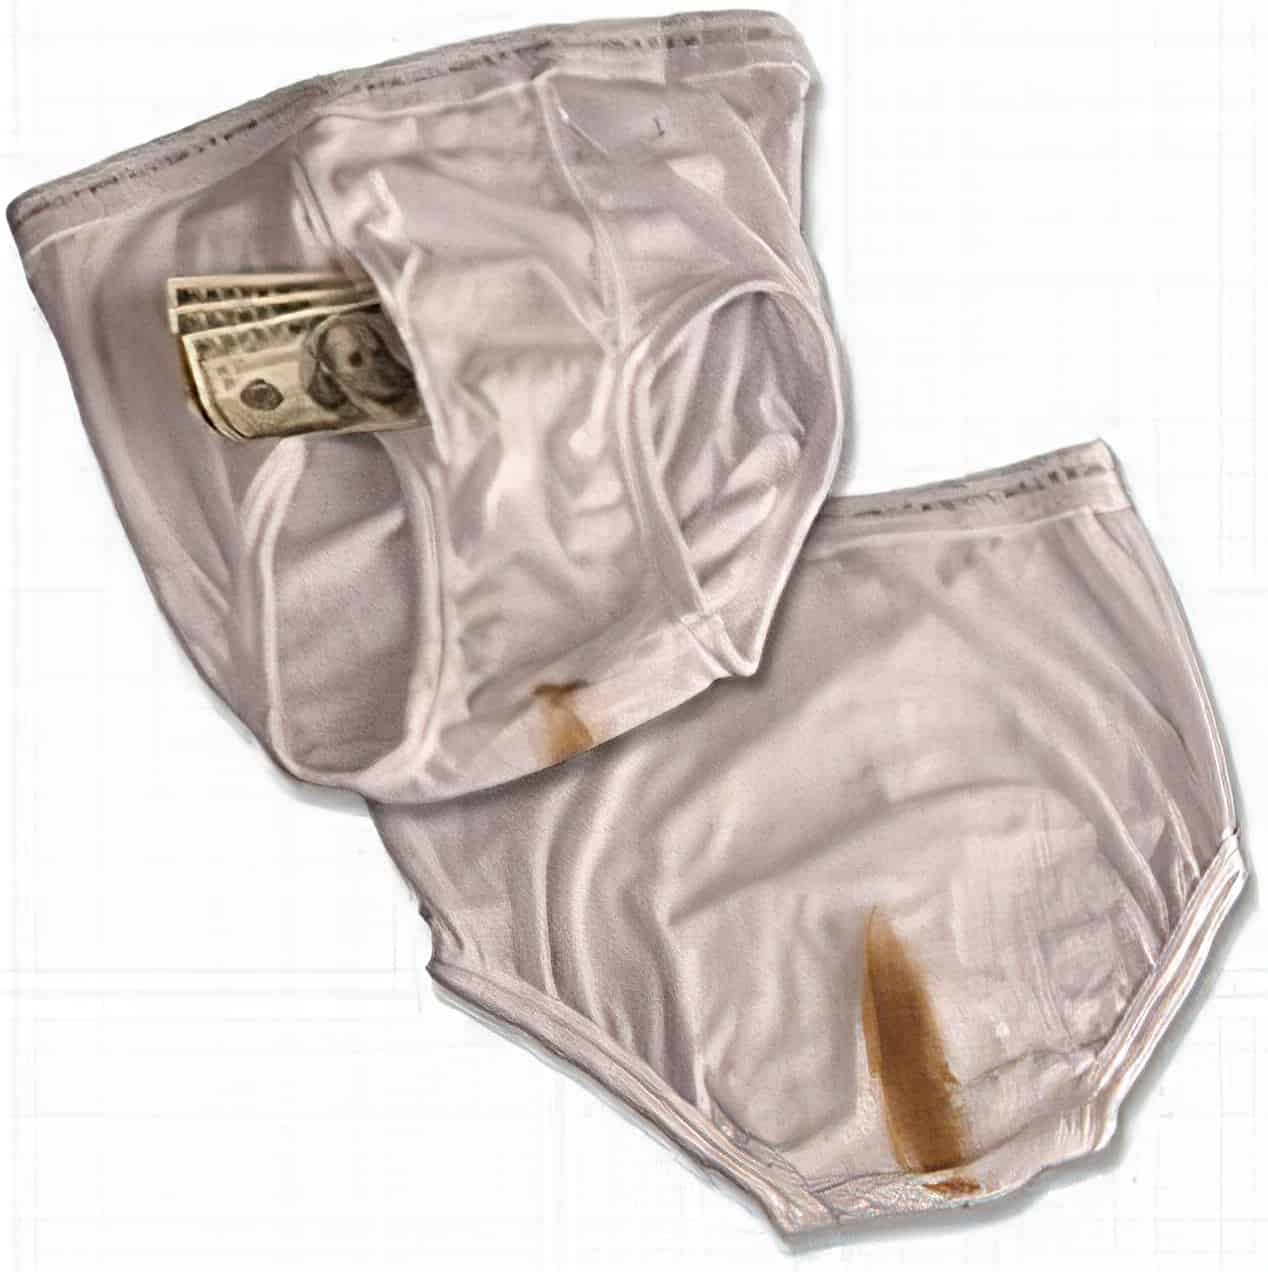 Buy dirty underwear